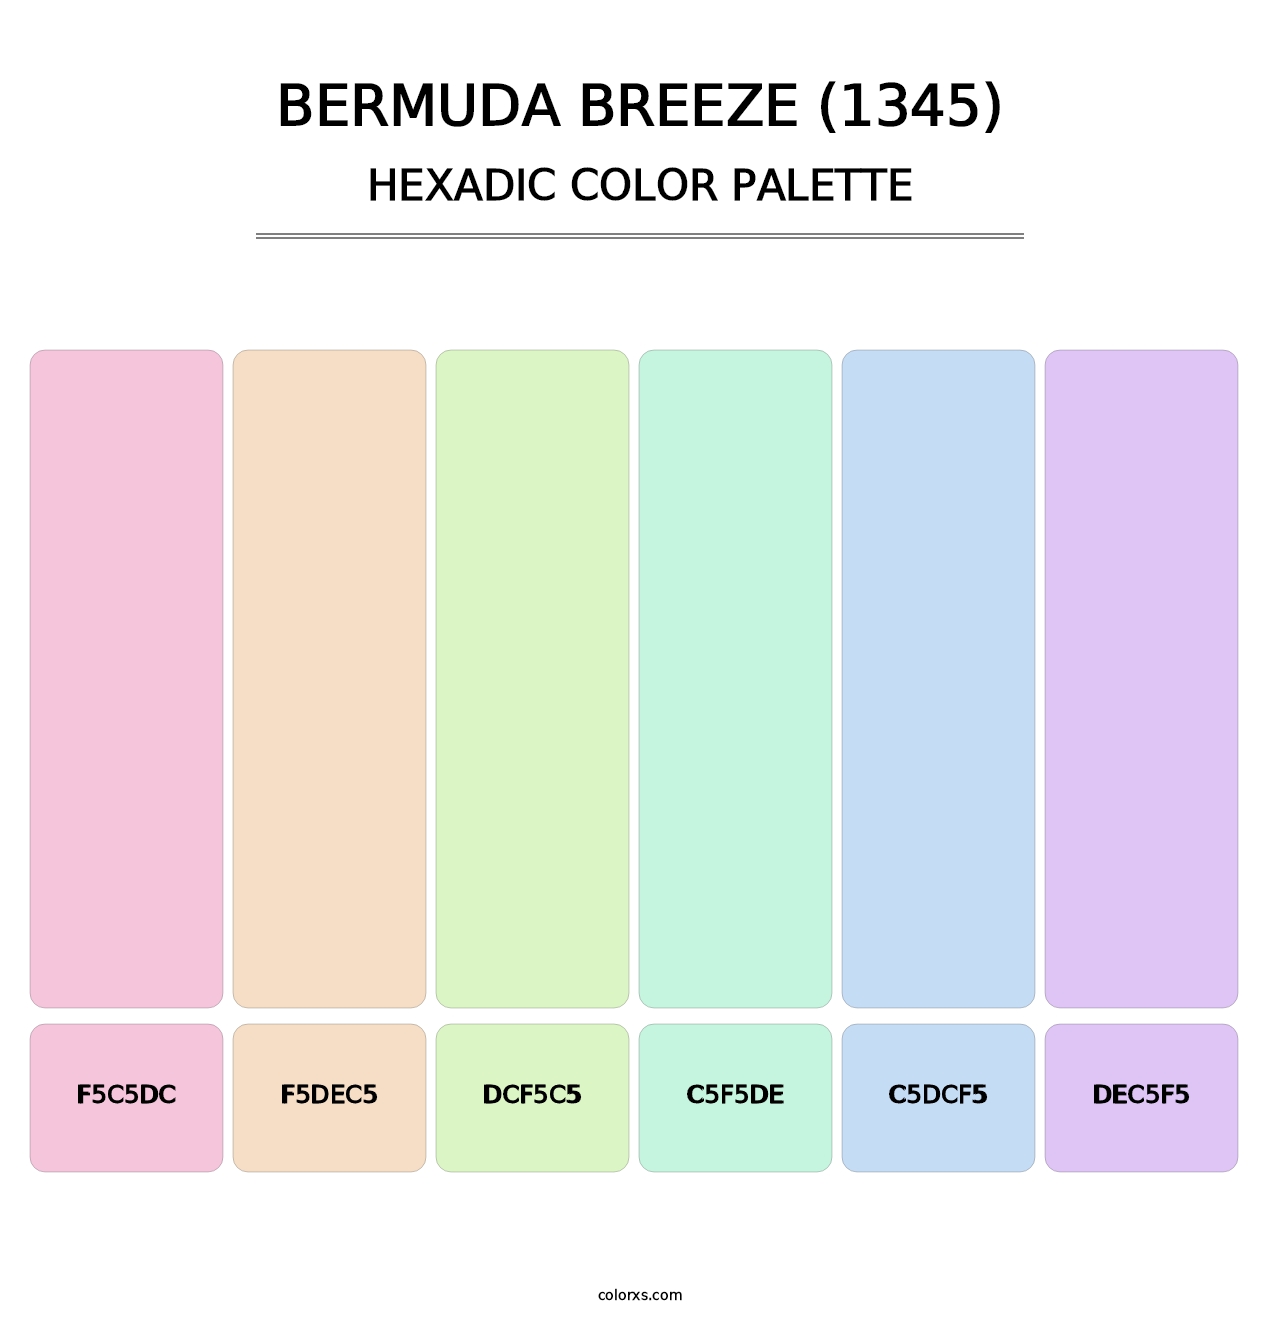 Bermuda Breeze (1345) - Hexadic Color Palette